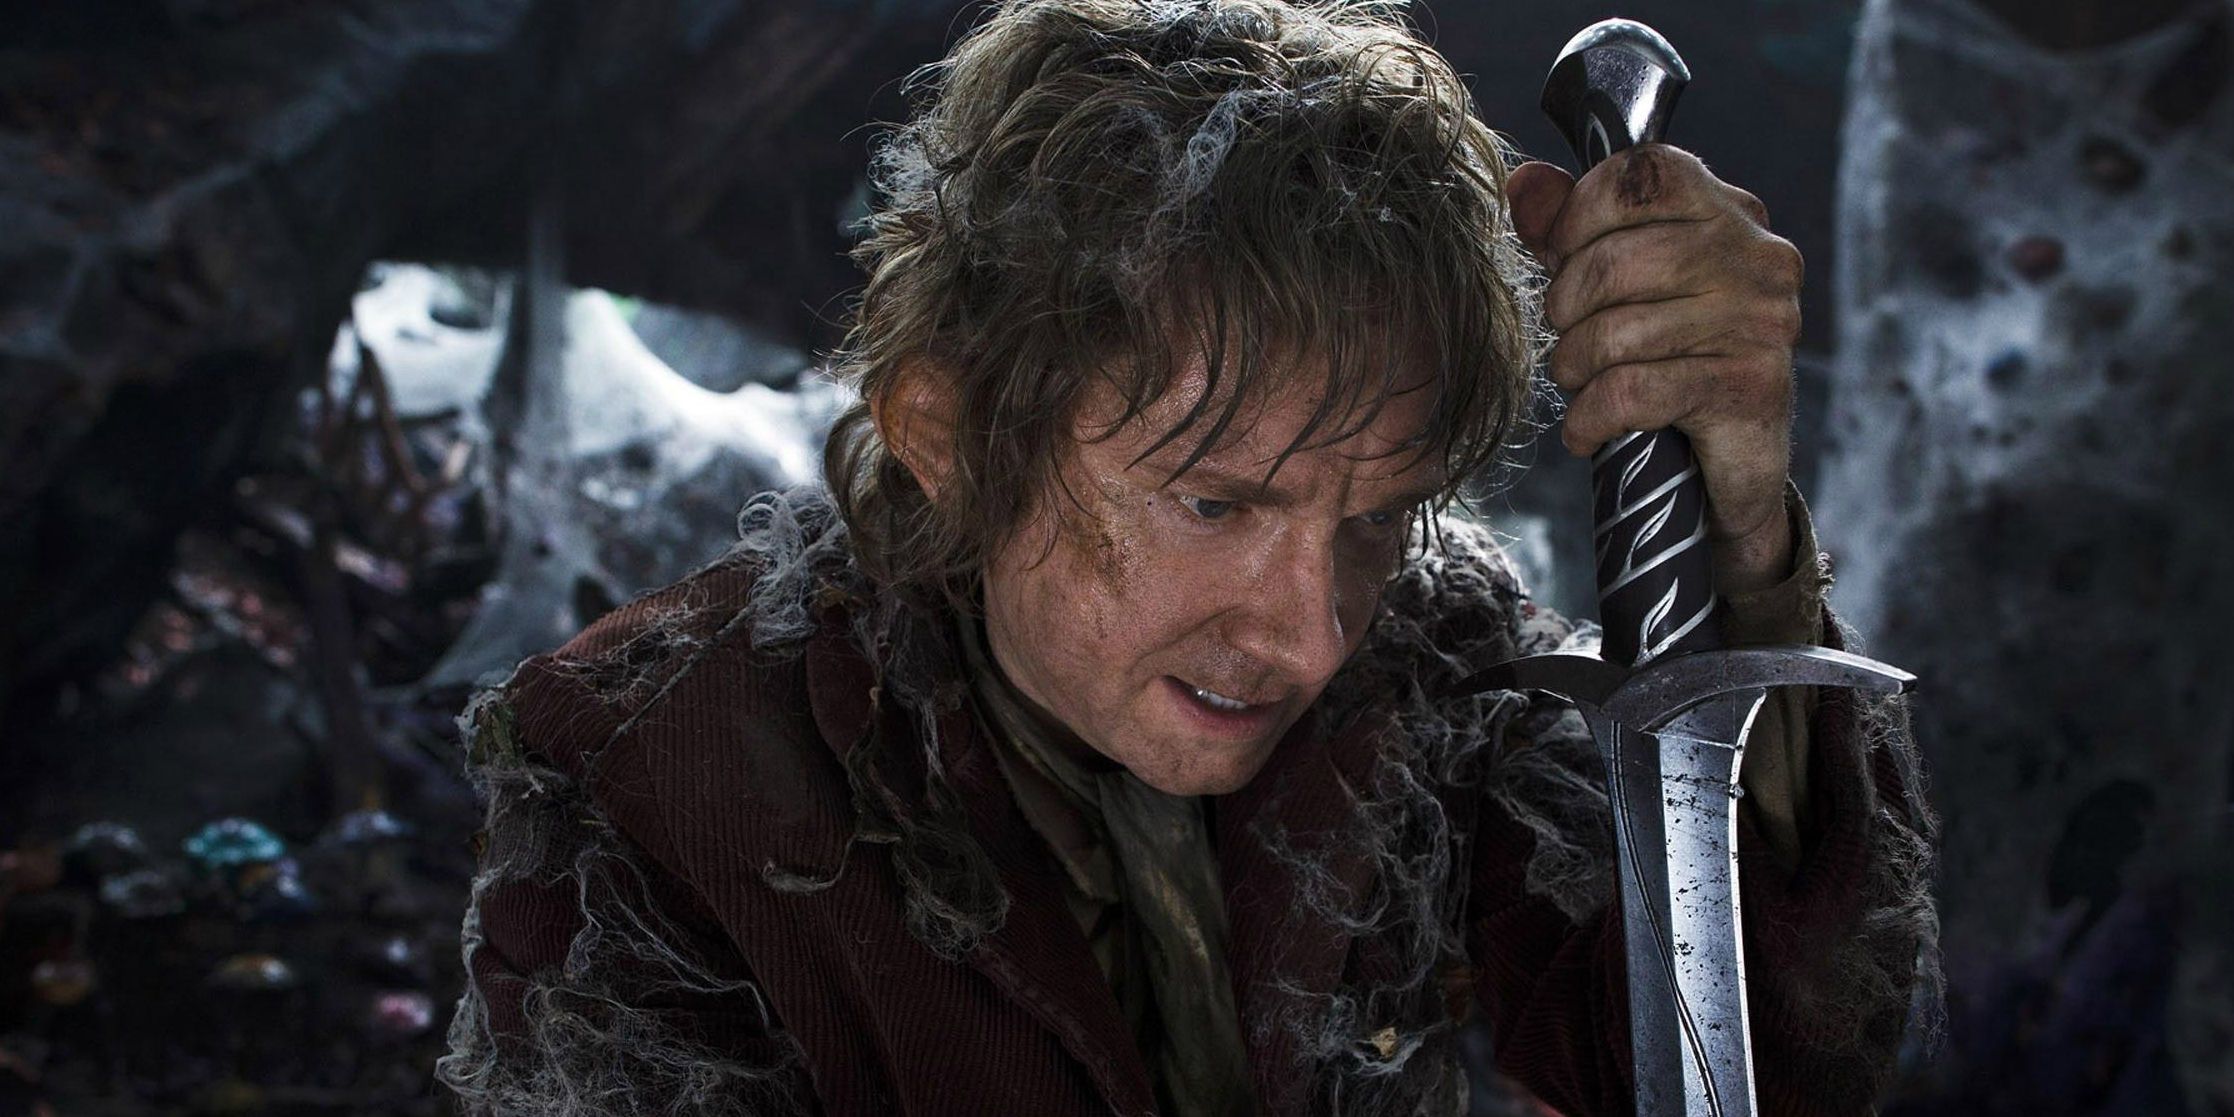 Magic Sword Sting and Bilbo in the Hobbit Movie